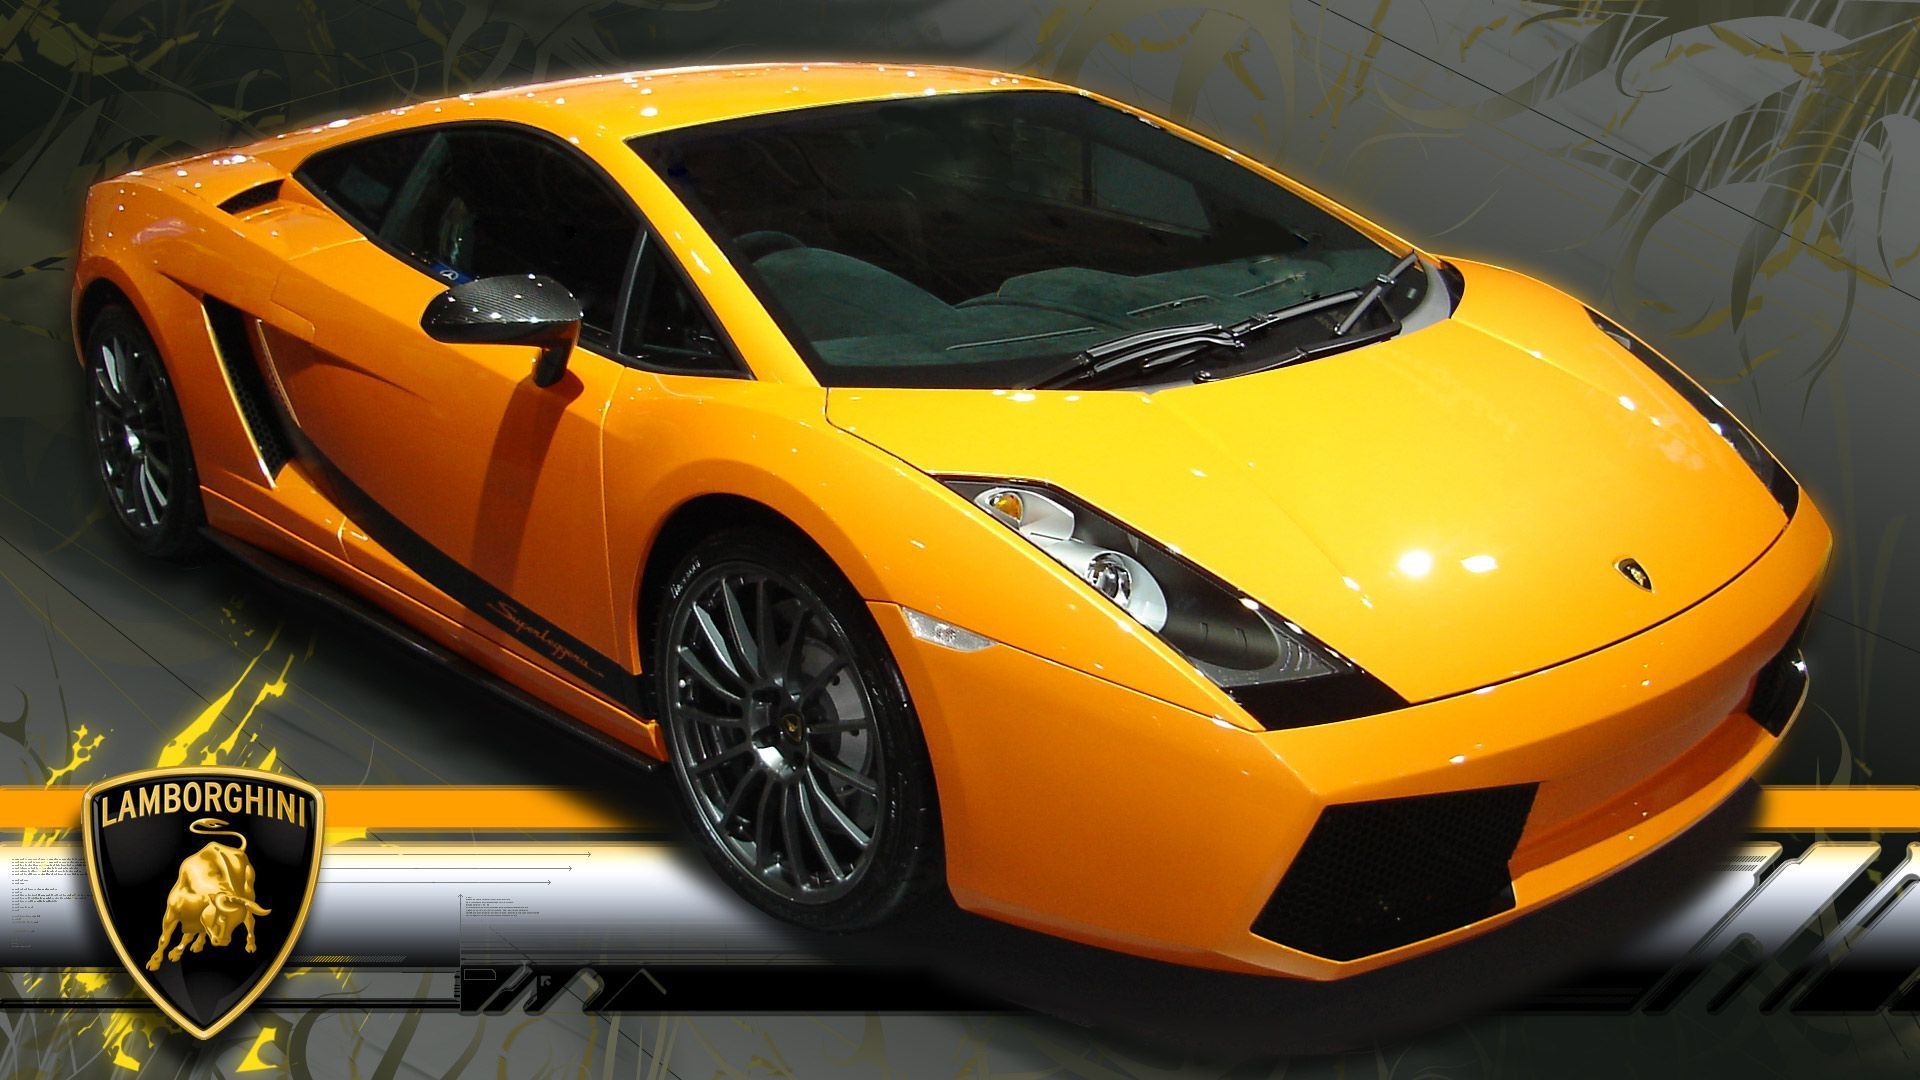 Download Lamborghini Wallpapers In HD For Desktop And Mobile Here